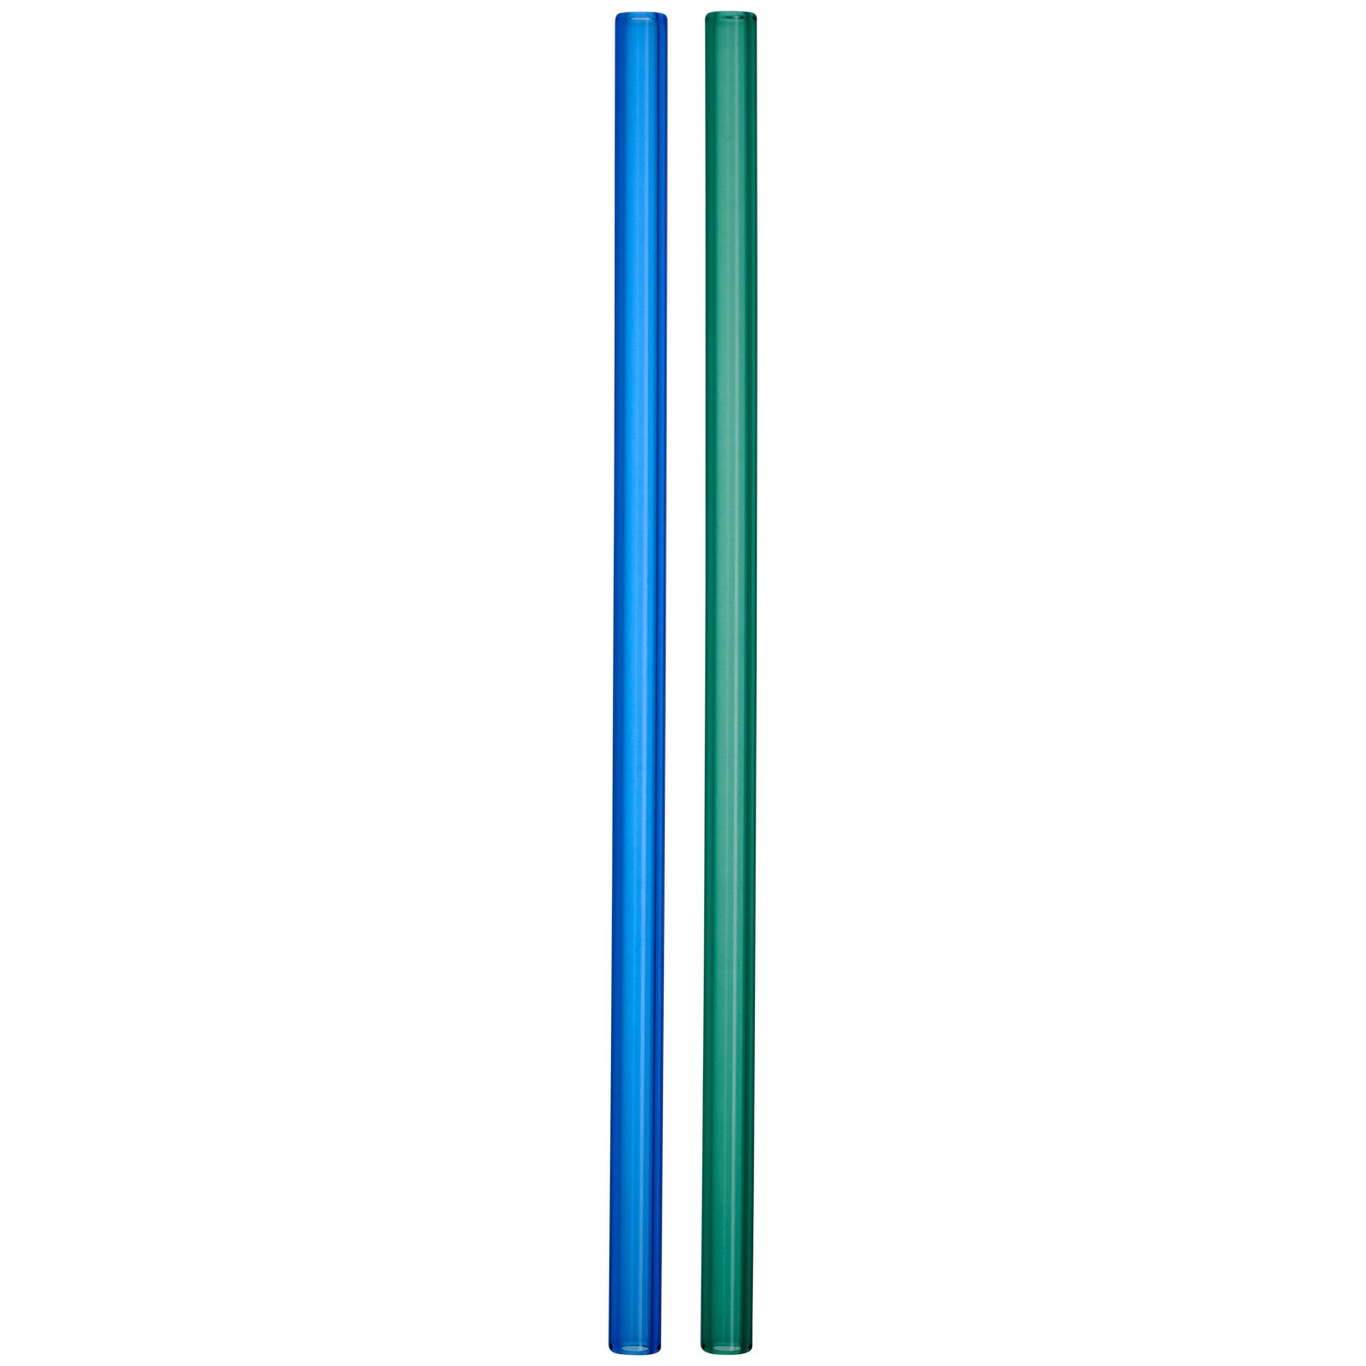 Sipsavor Straws 2-pack, Blue/Green